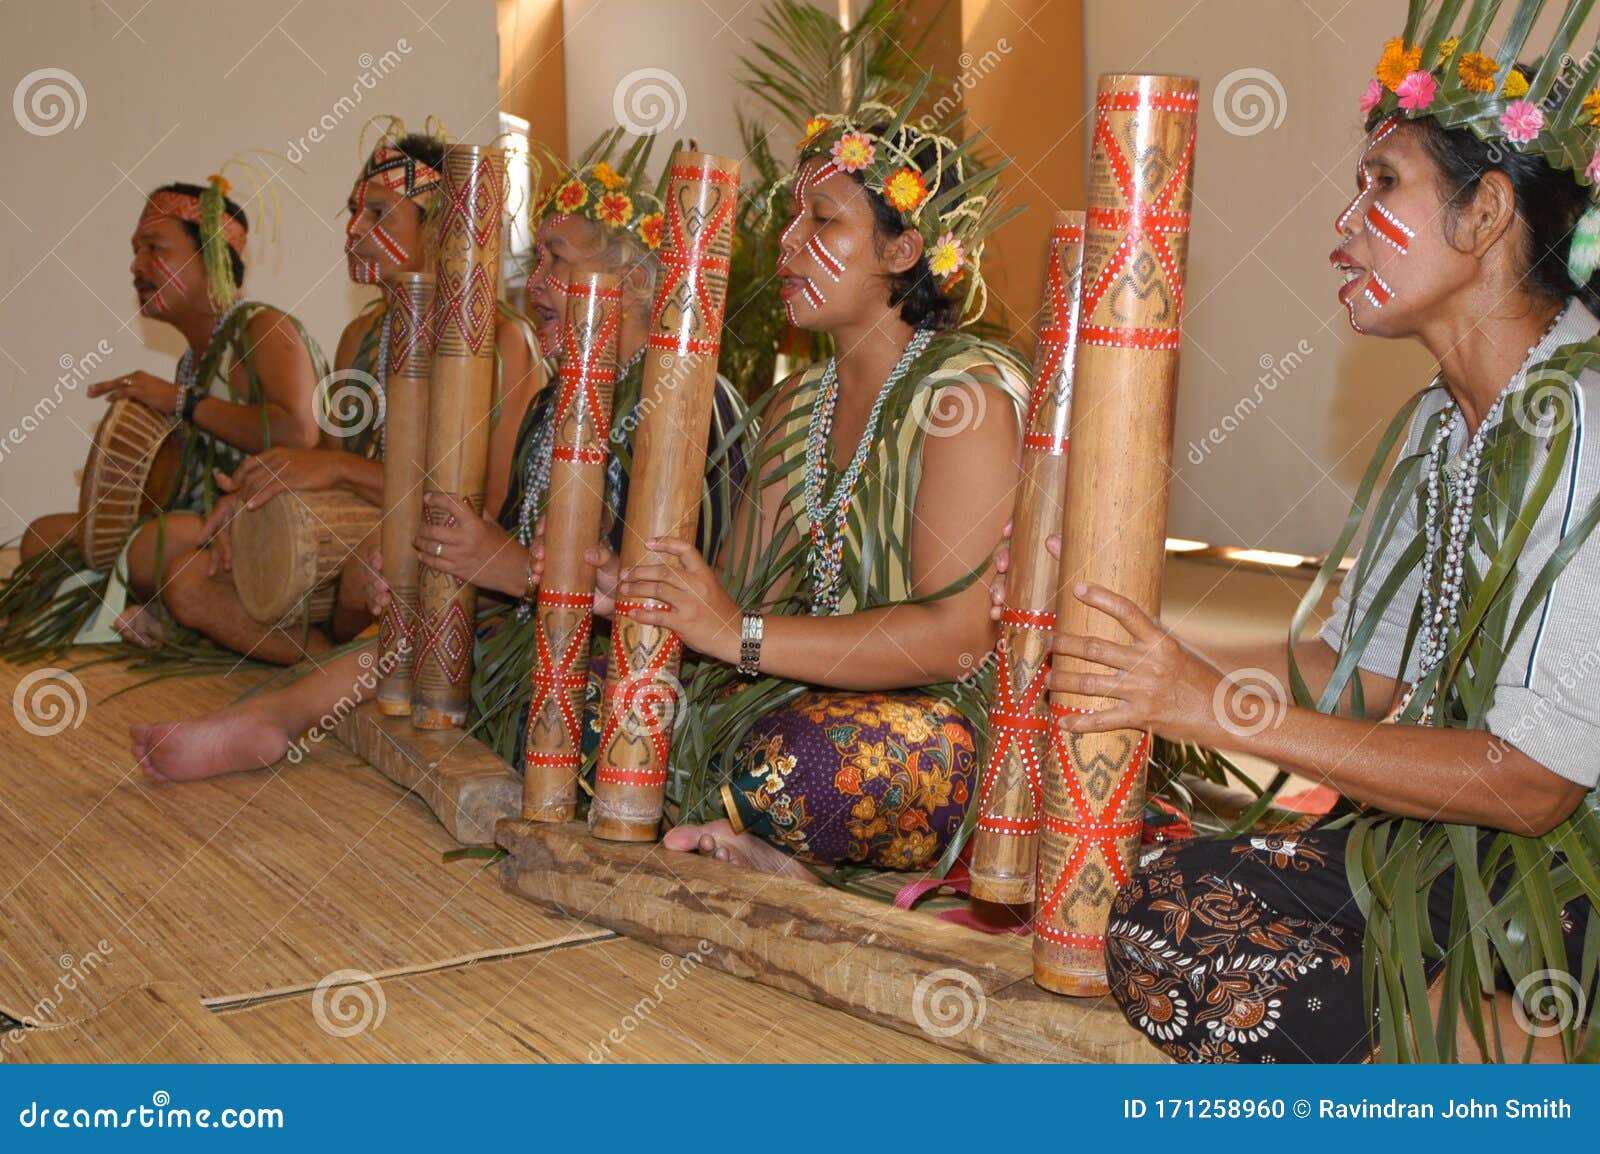  Orang  Asli  editorial image Image of festive minority 